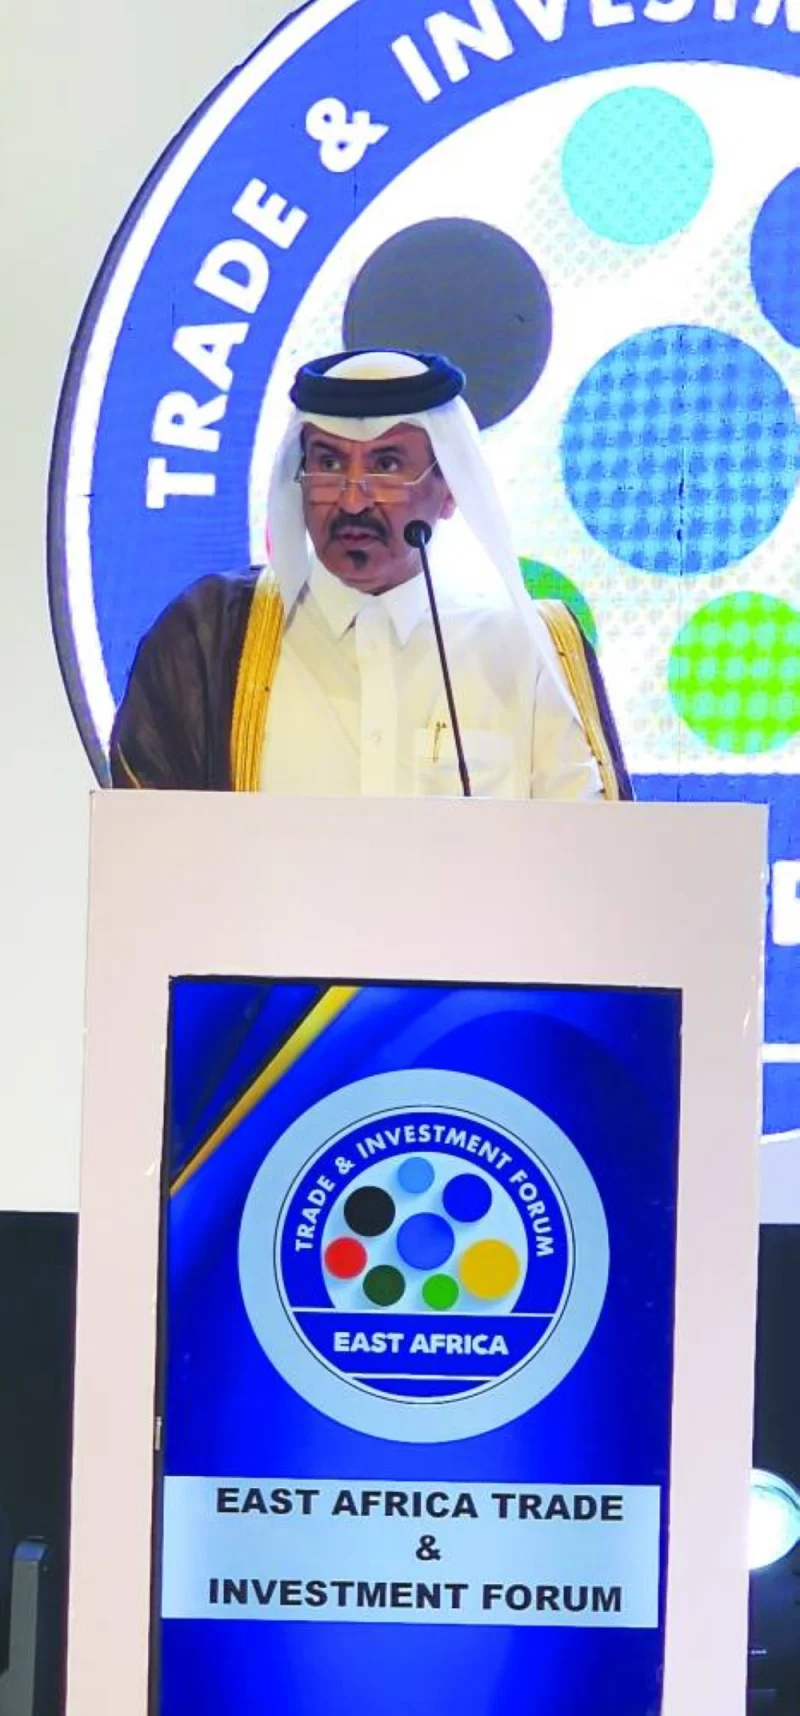 Qatar Chamber first vice-chairman Mohamed bin Towar al-Kuwari speaking at the event.